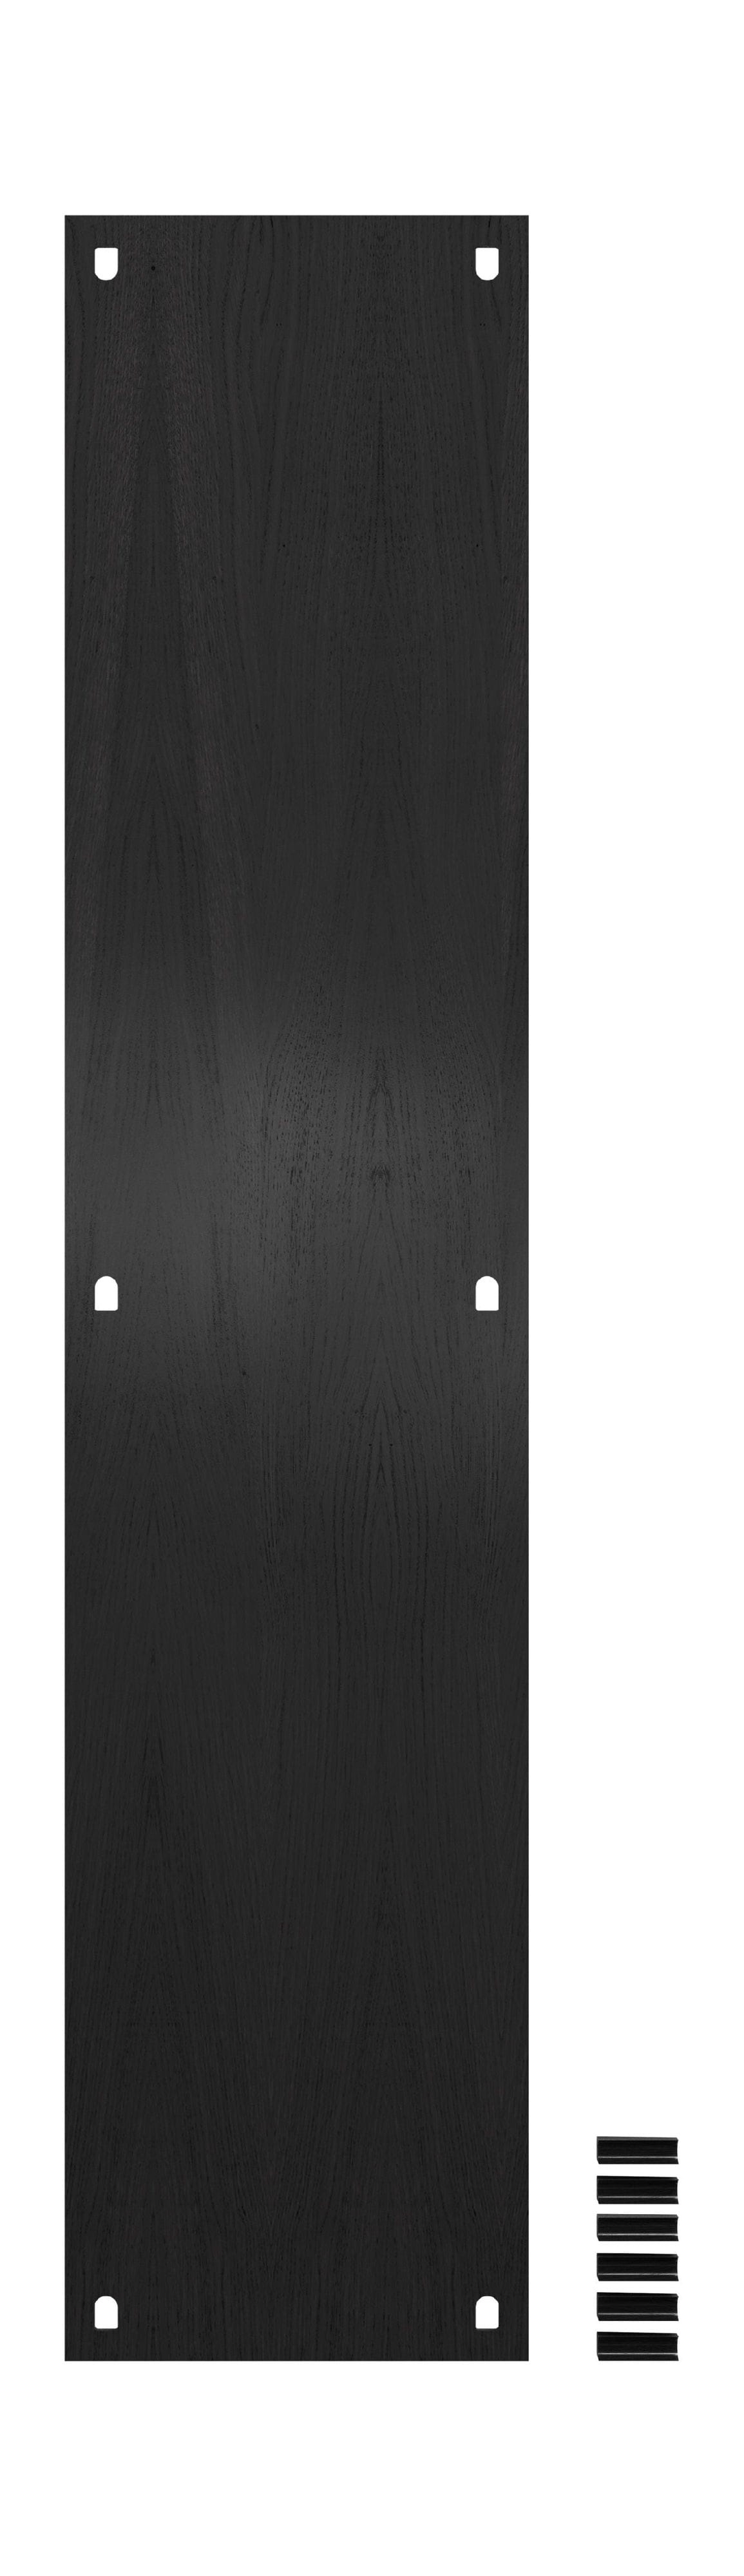 Moebe Shelving System/Wall Shelving Shelf 162x35 Cm, Black